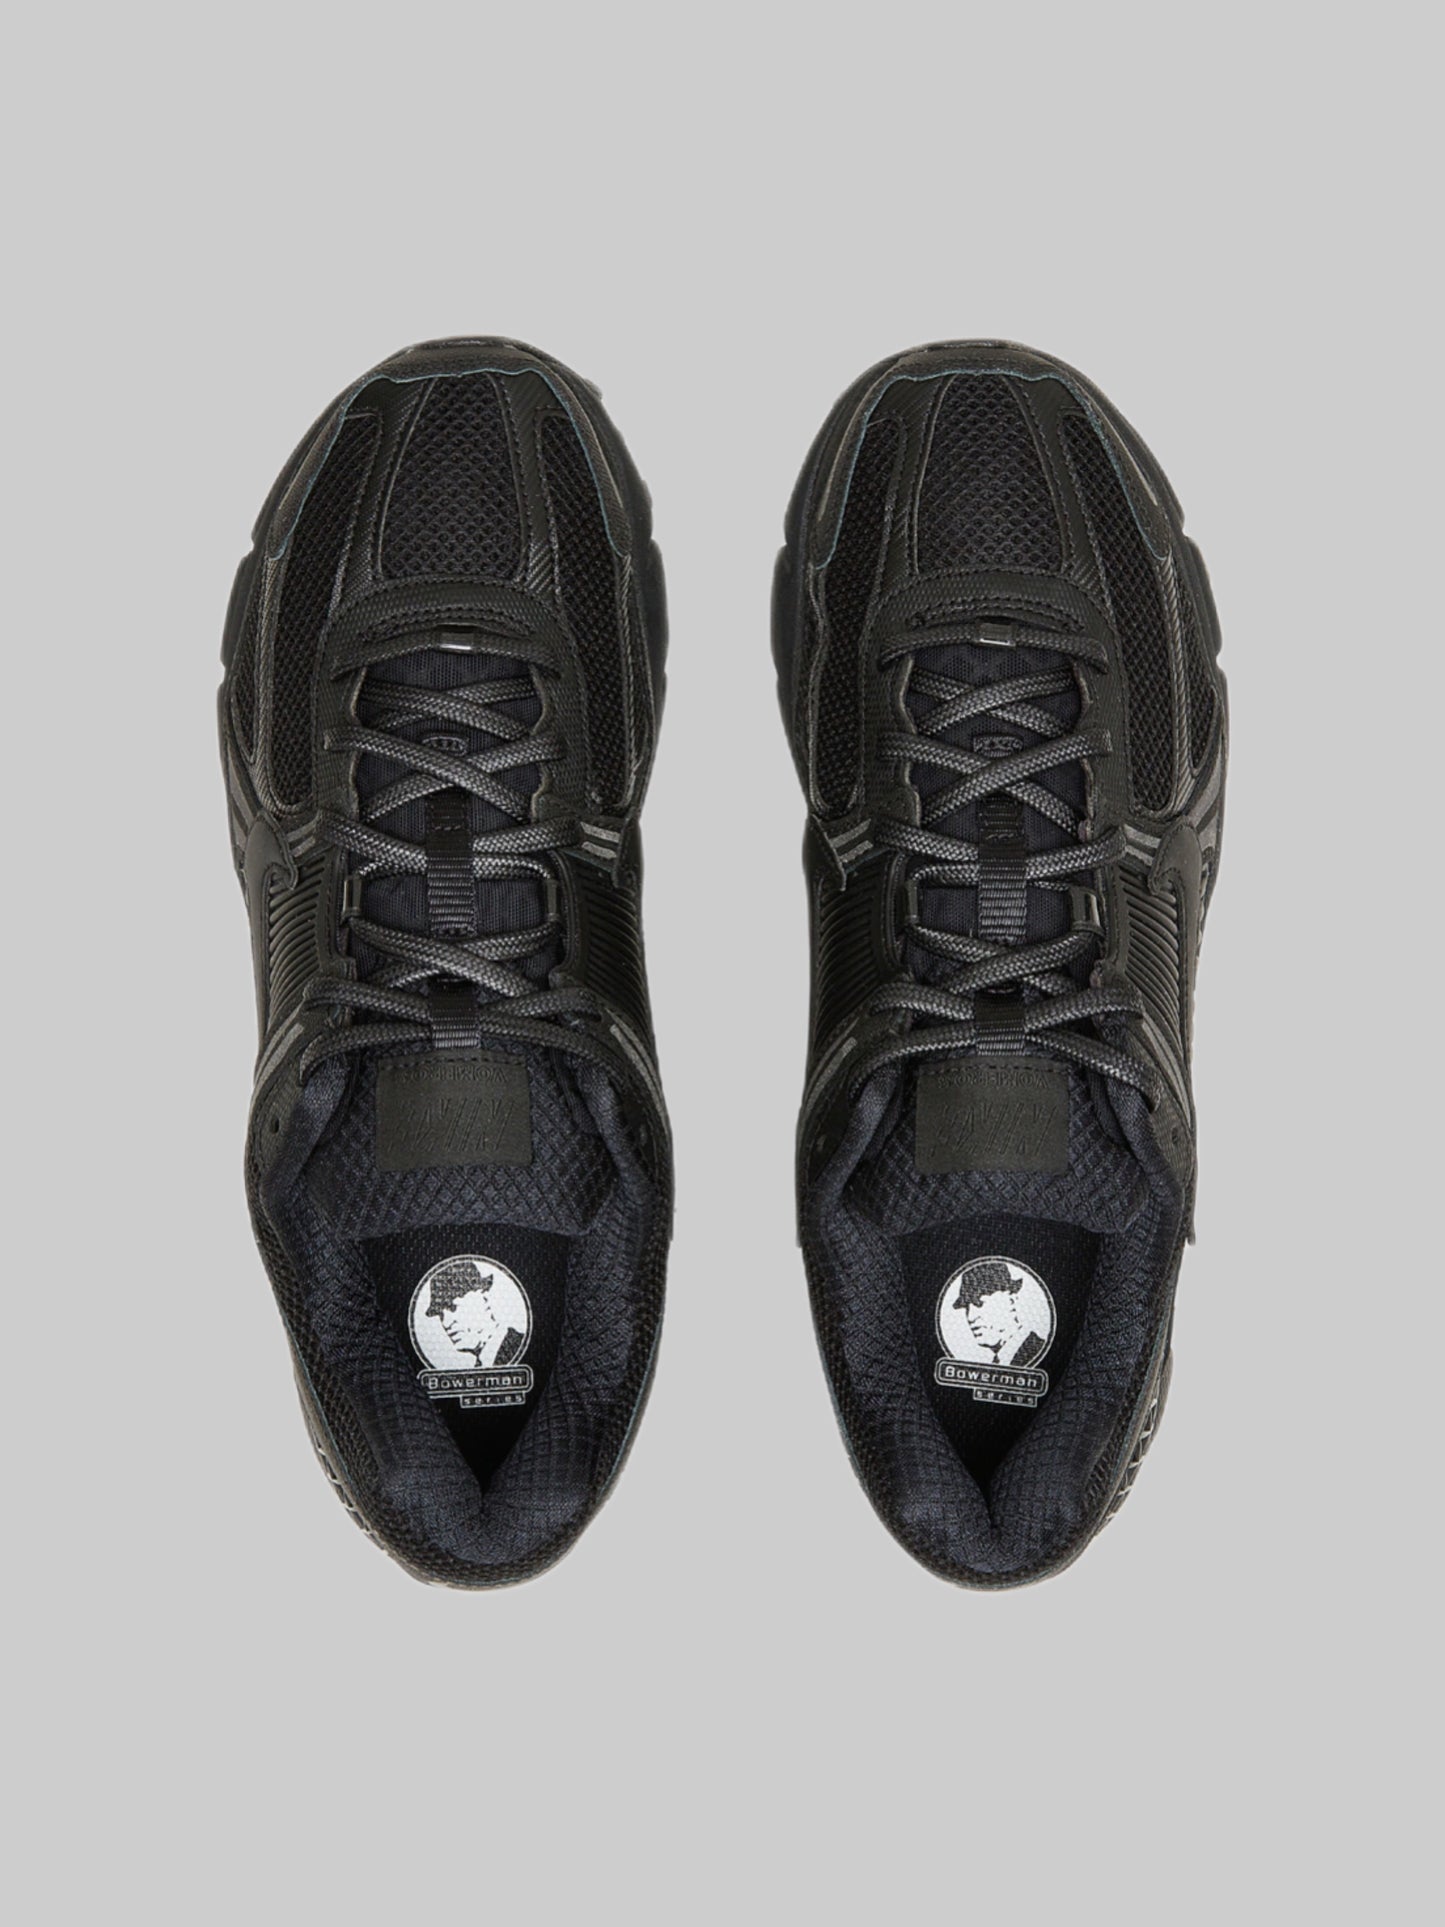 Nike Vomero 5 Triple Black